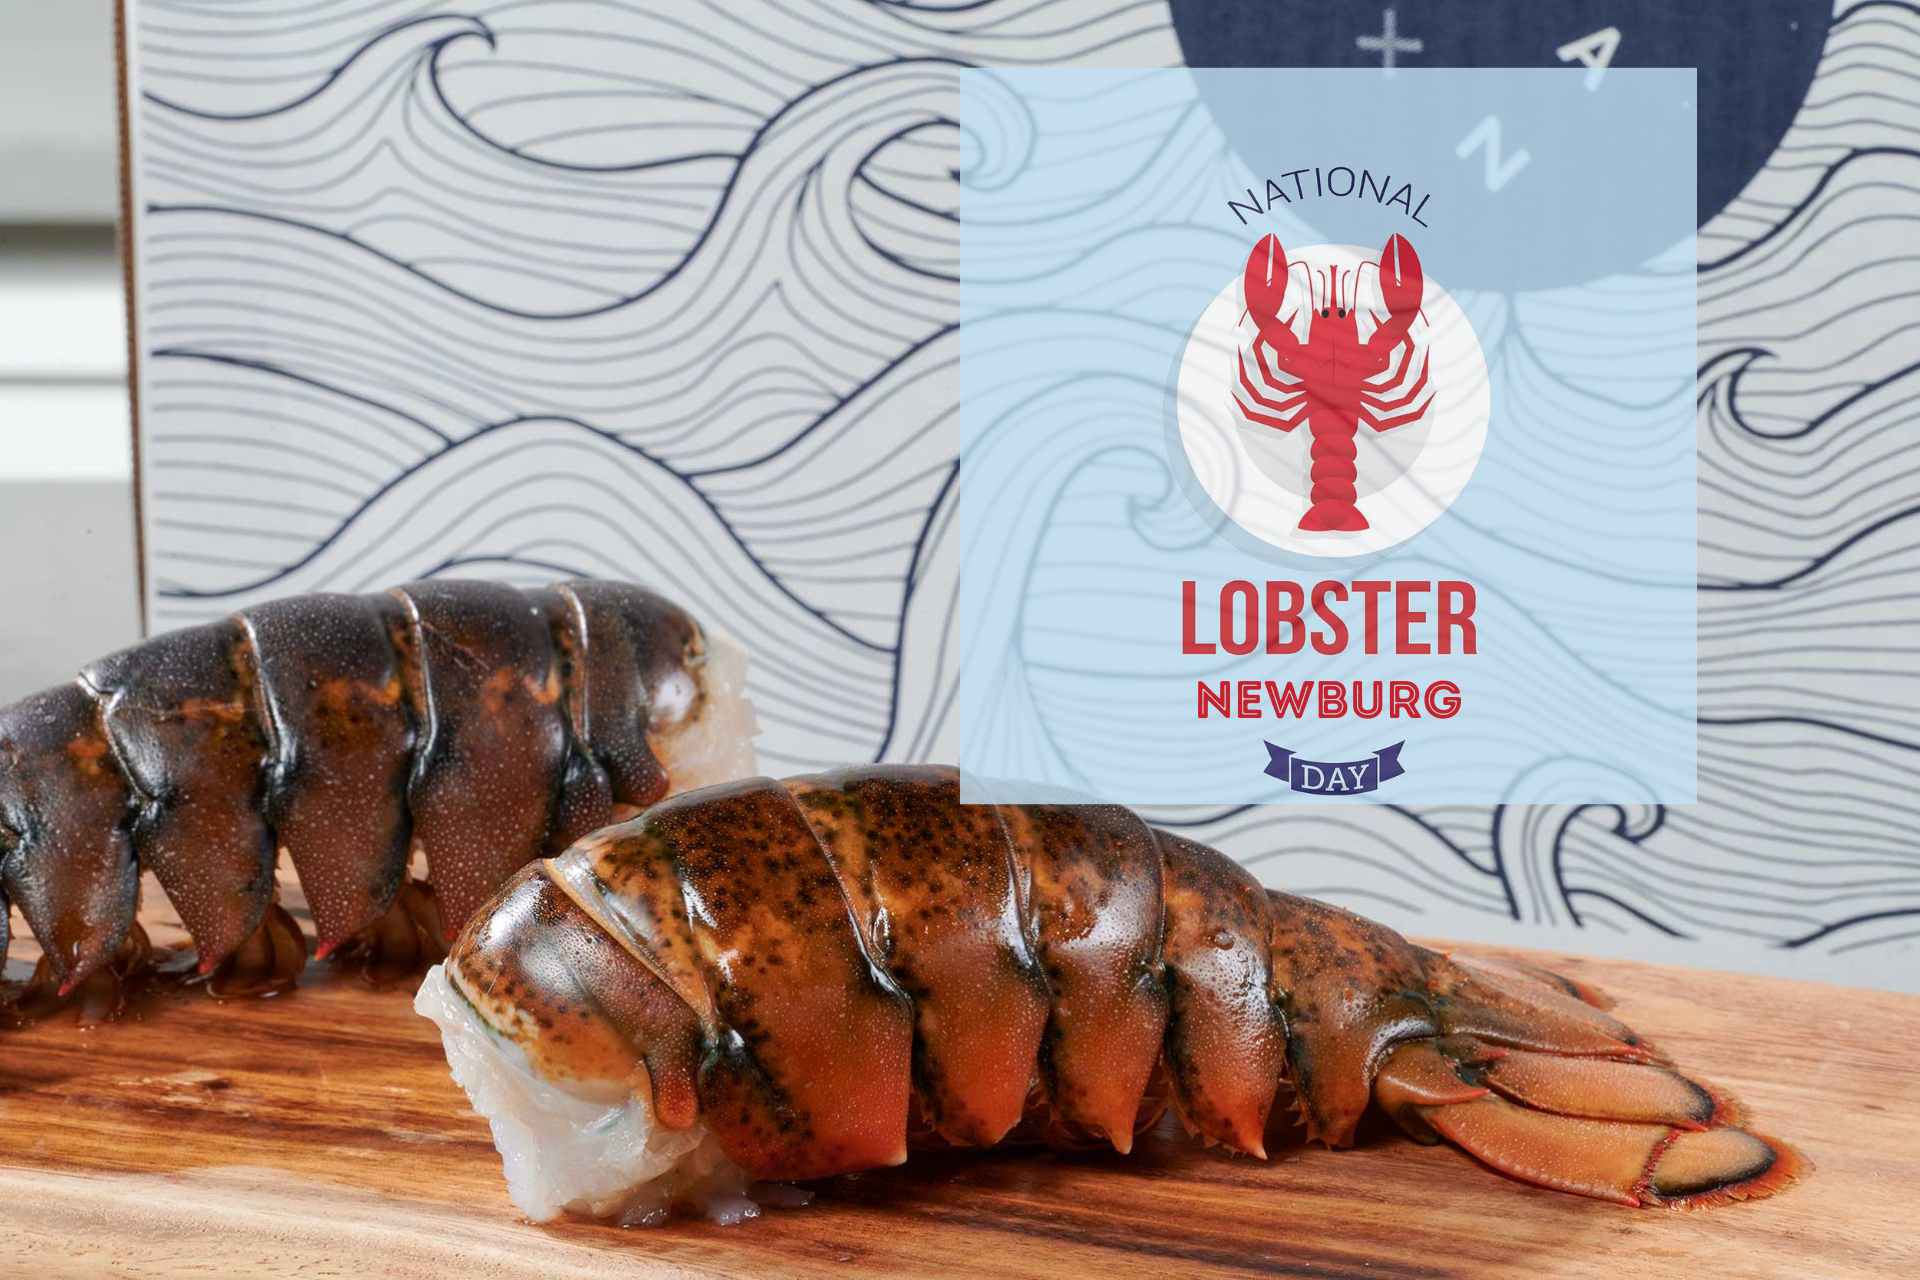 National Lobster Newburg Day